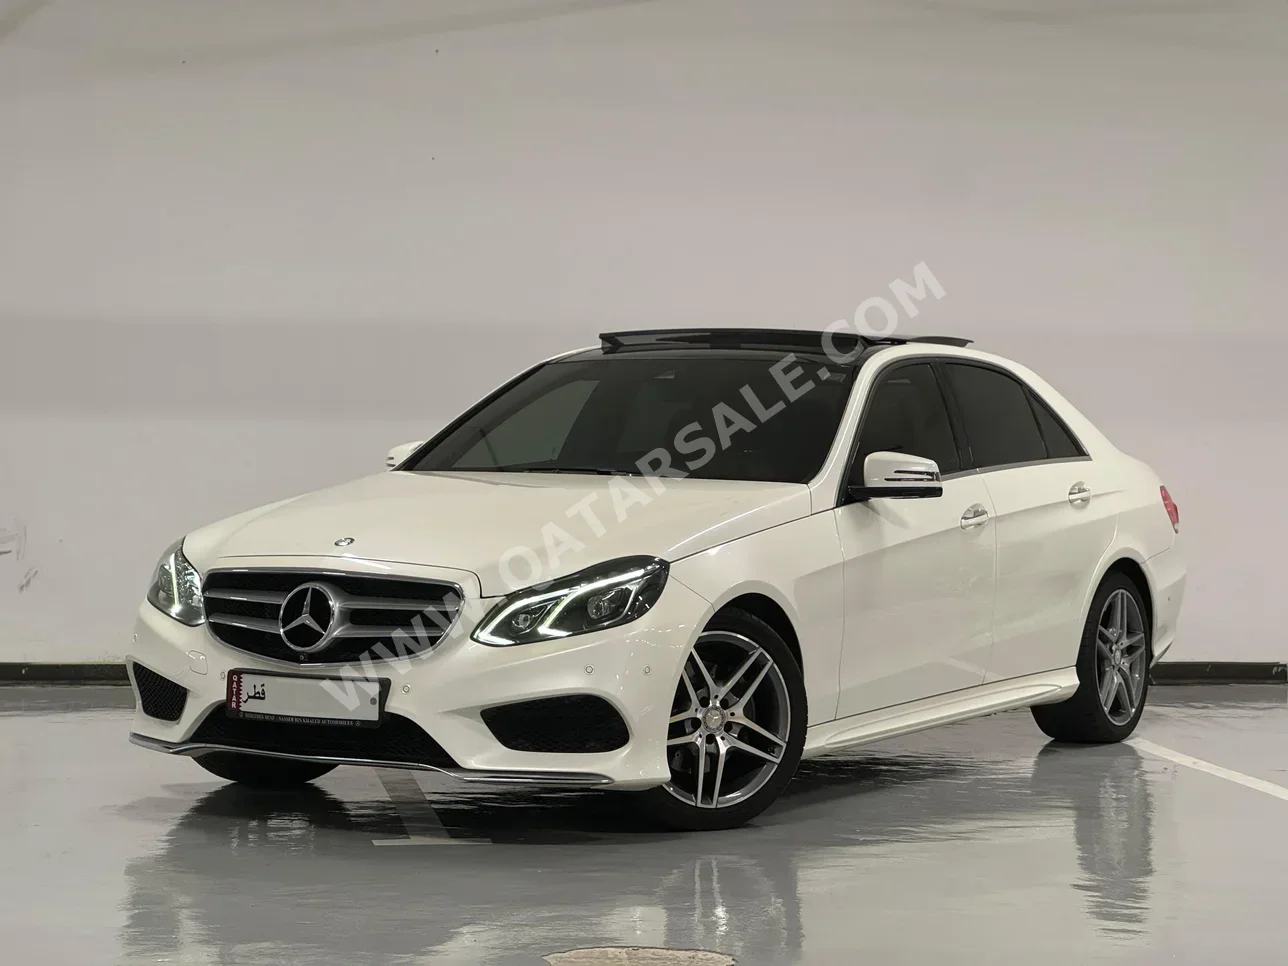 Mercedes-Benz  E-Class  300  2015  Automatic  87,000 Km  6 Cylinder  Rear Wheel Drive (RWD)  Sedan  White